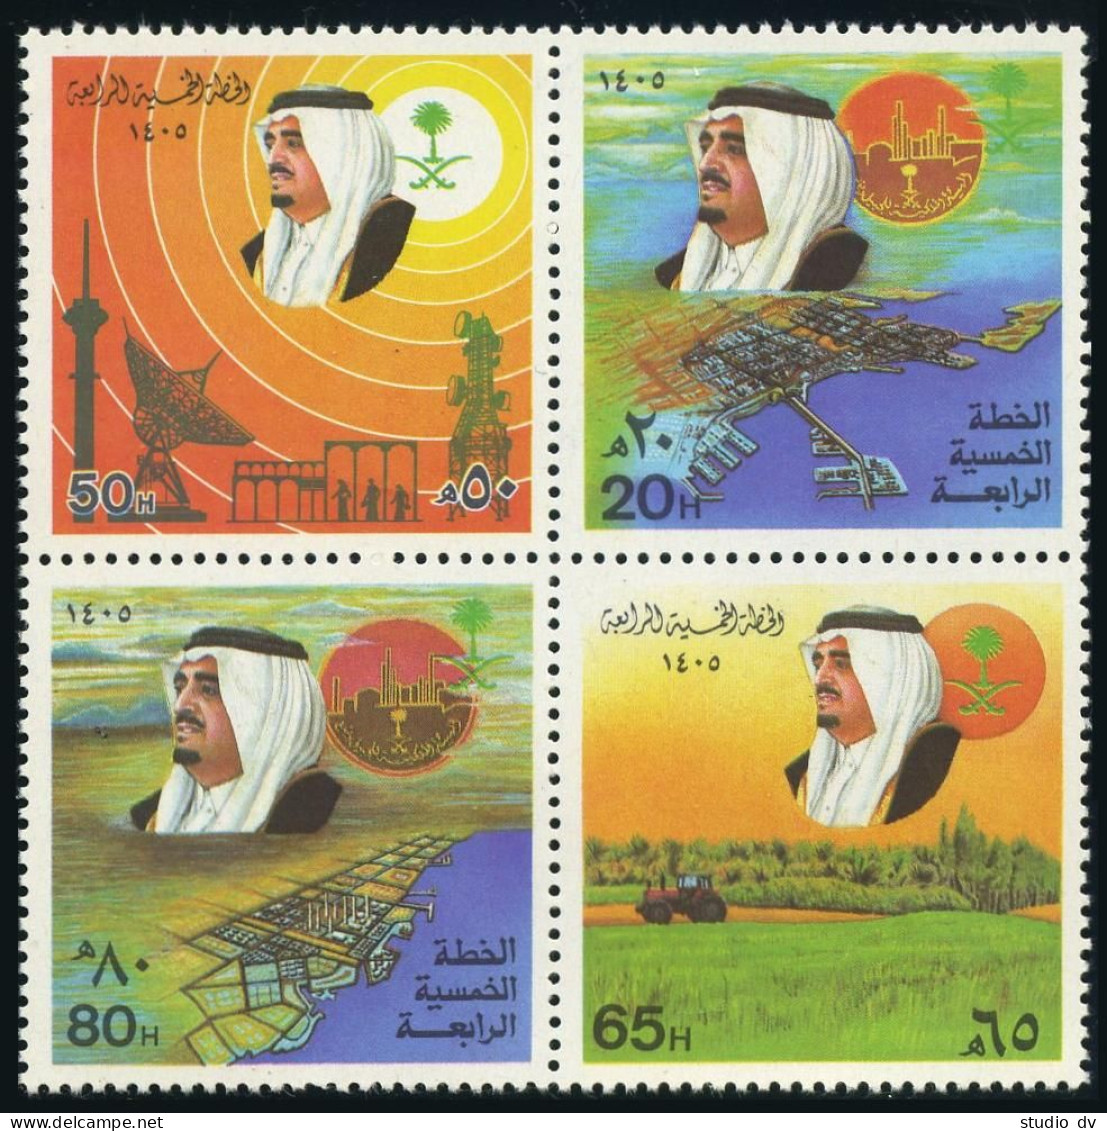 Saudi Arabia 927-930a, MNH. Mi 800-803. Development Plan, 1985. King Fahd.Harbor - Saudi Arabia